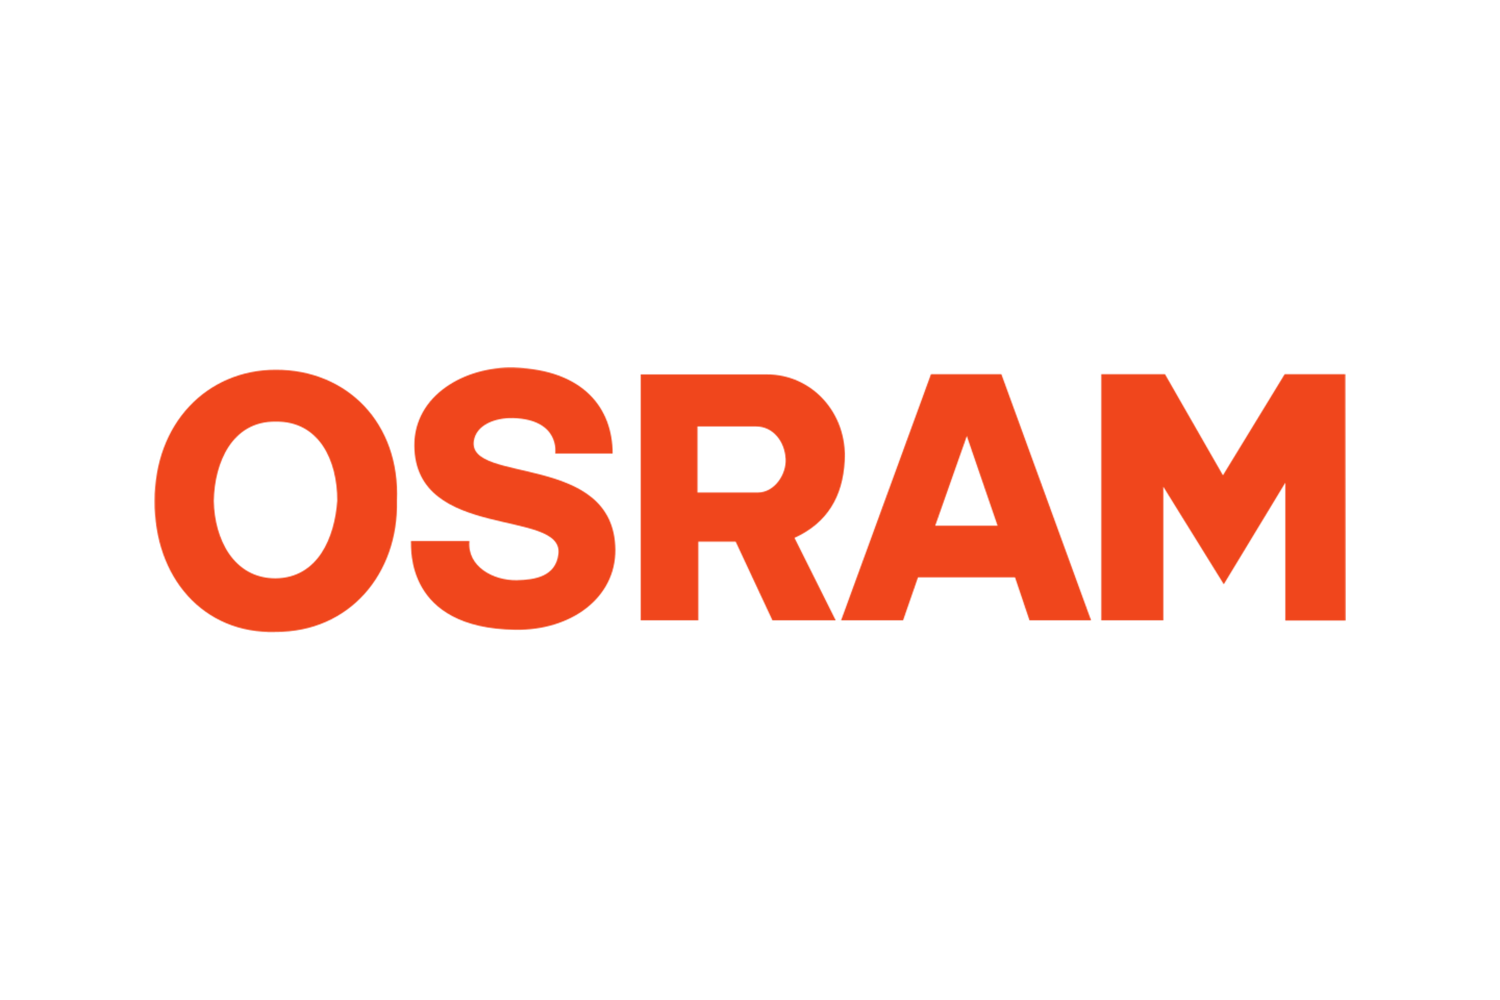 OSRAM OSRAM_logo.png